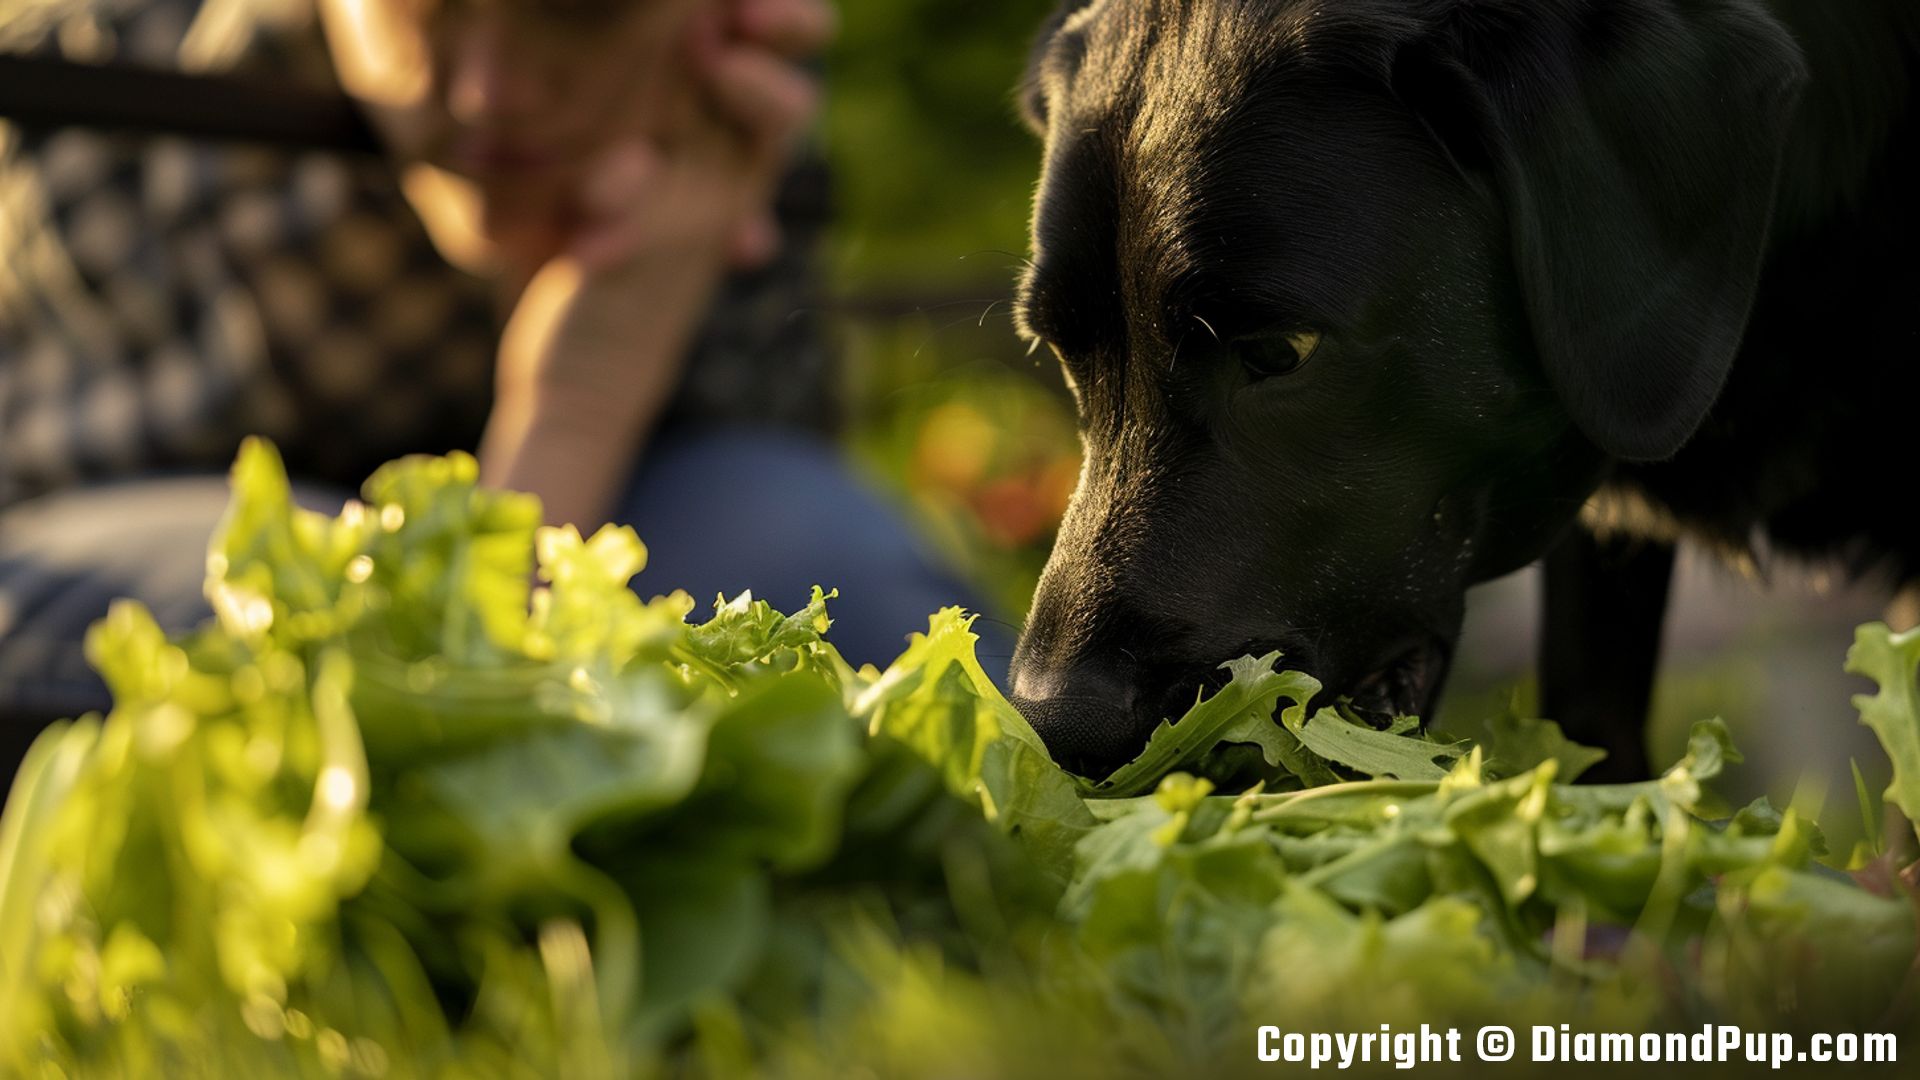 Photograph of a Cute Labrador Eating Lettuce